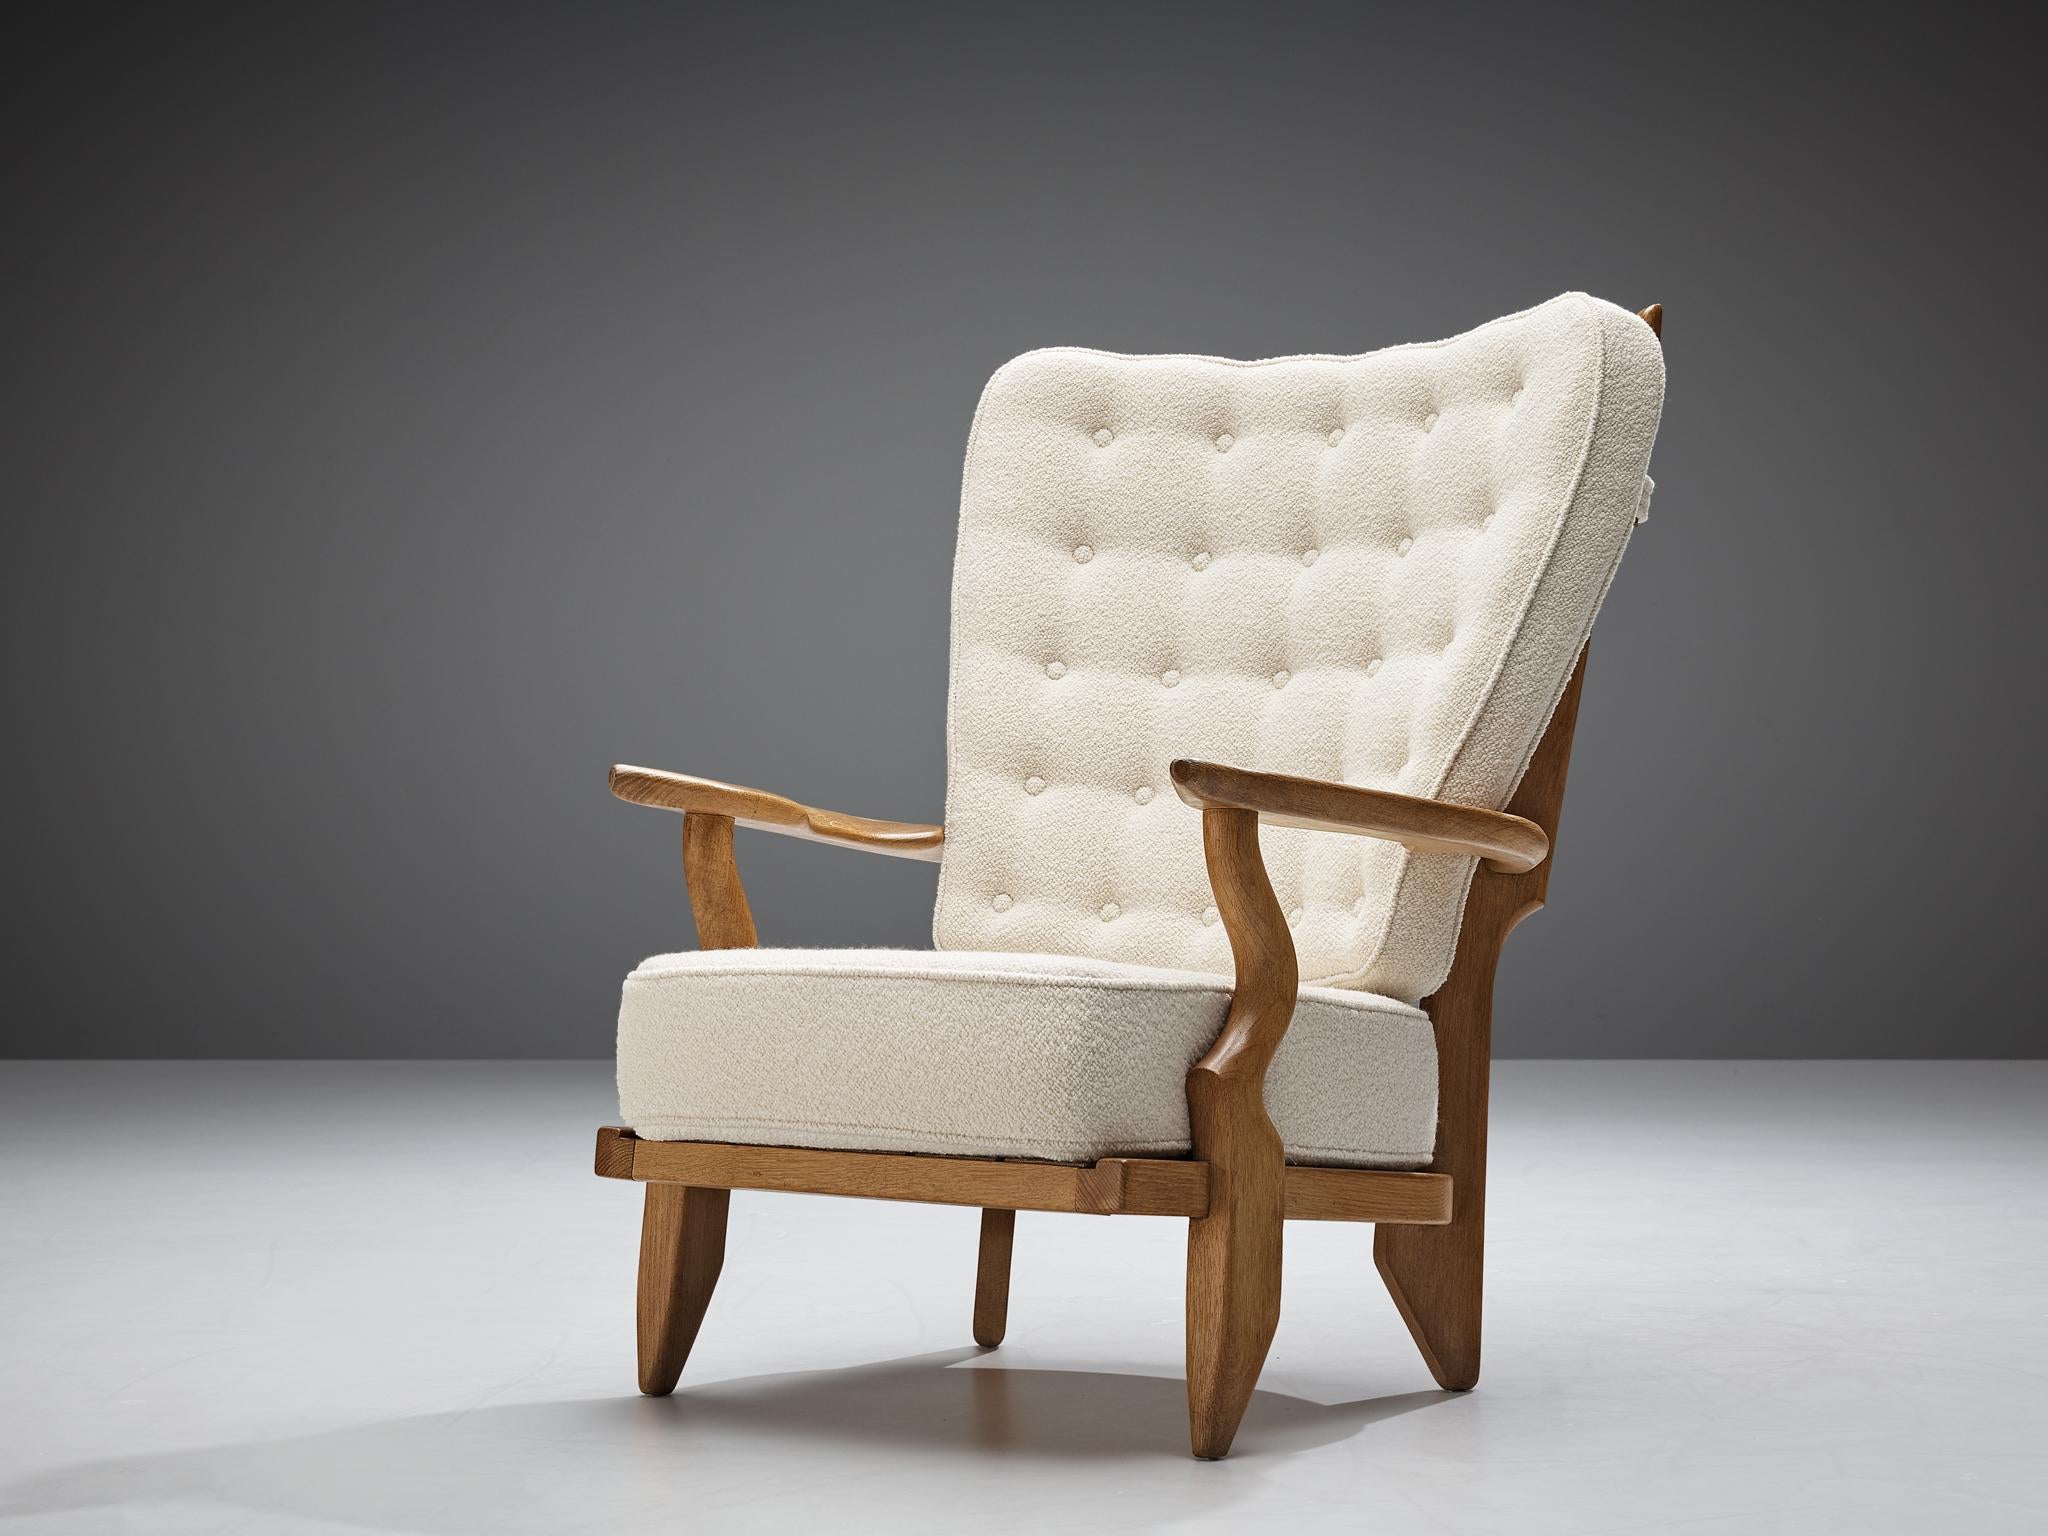 Guillerme & Chambron 'Grand Repos' Lounge Chair